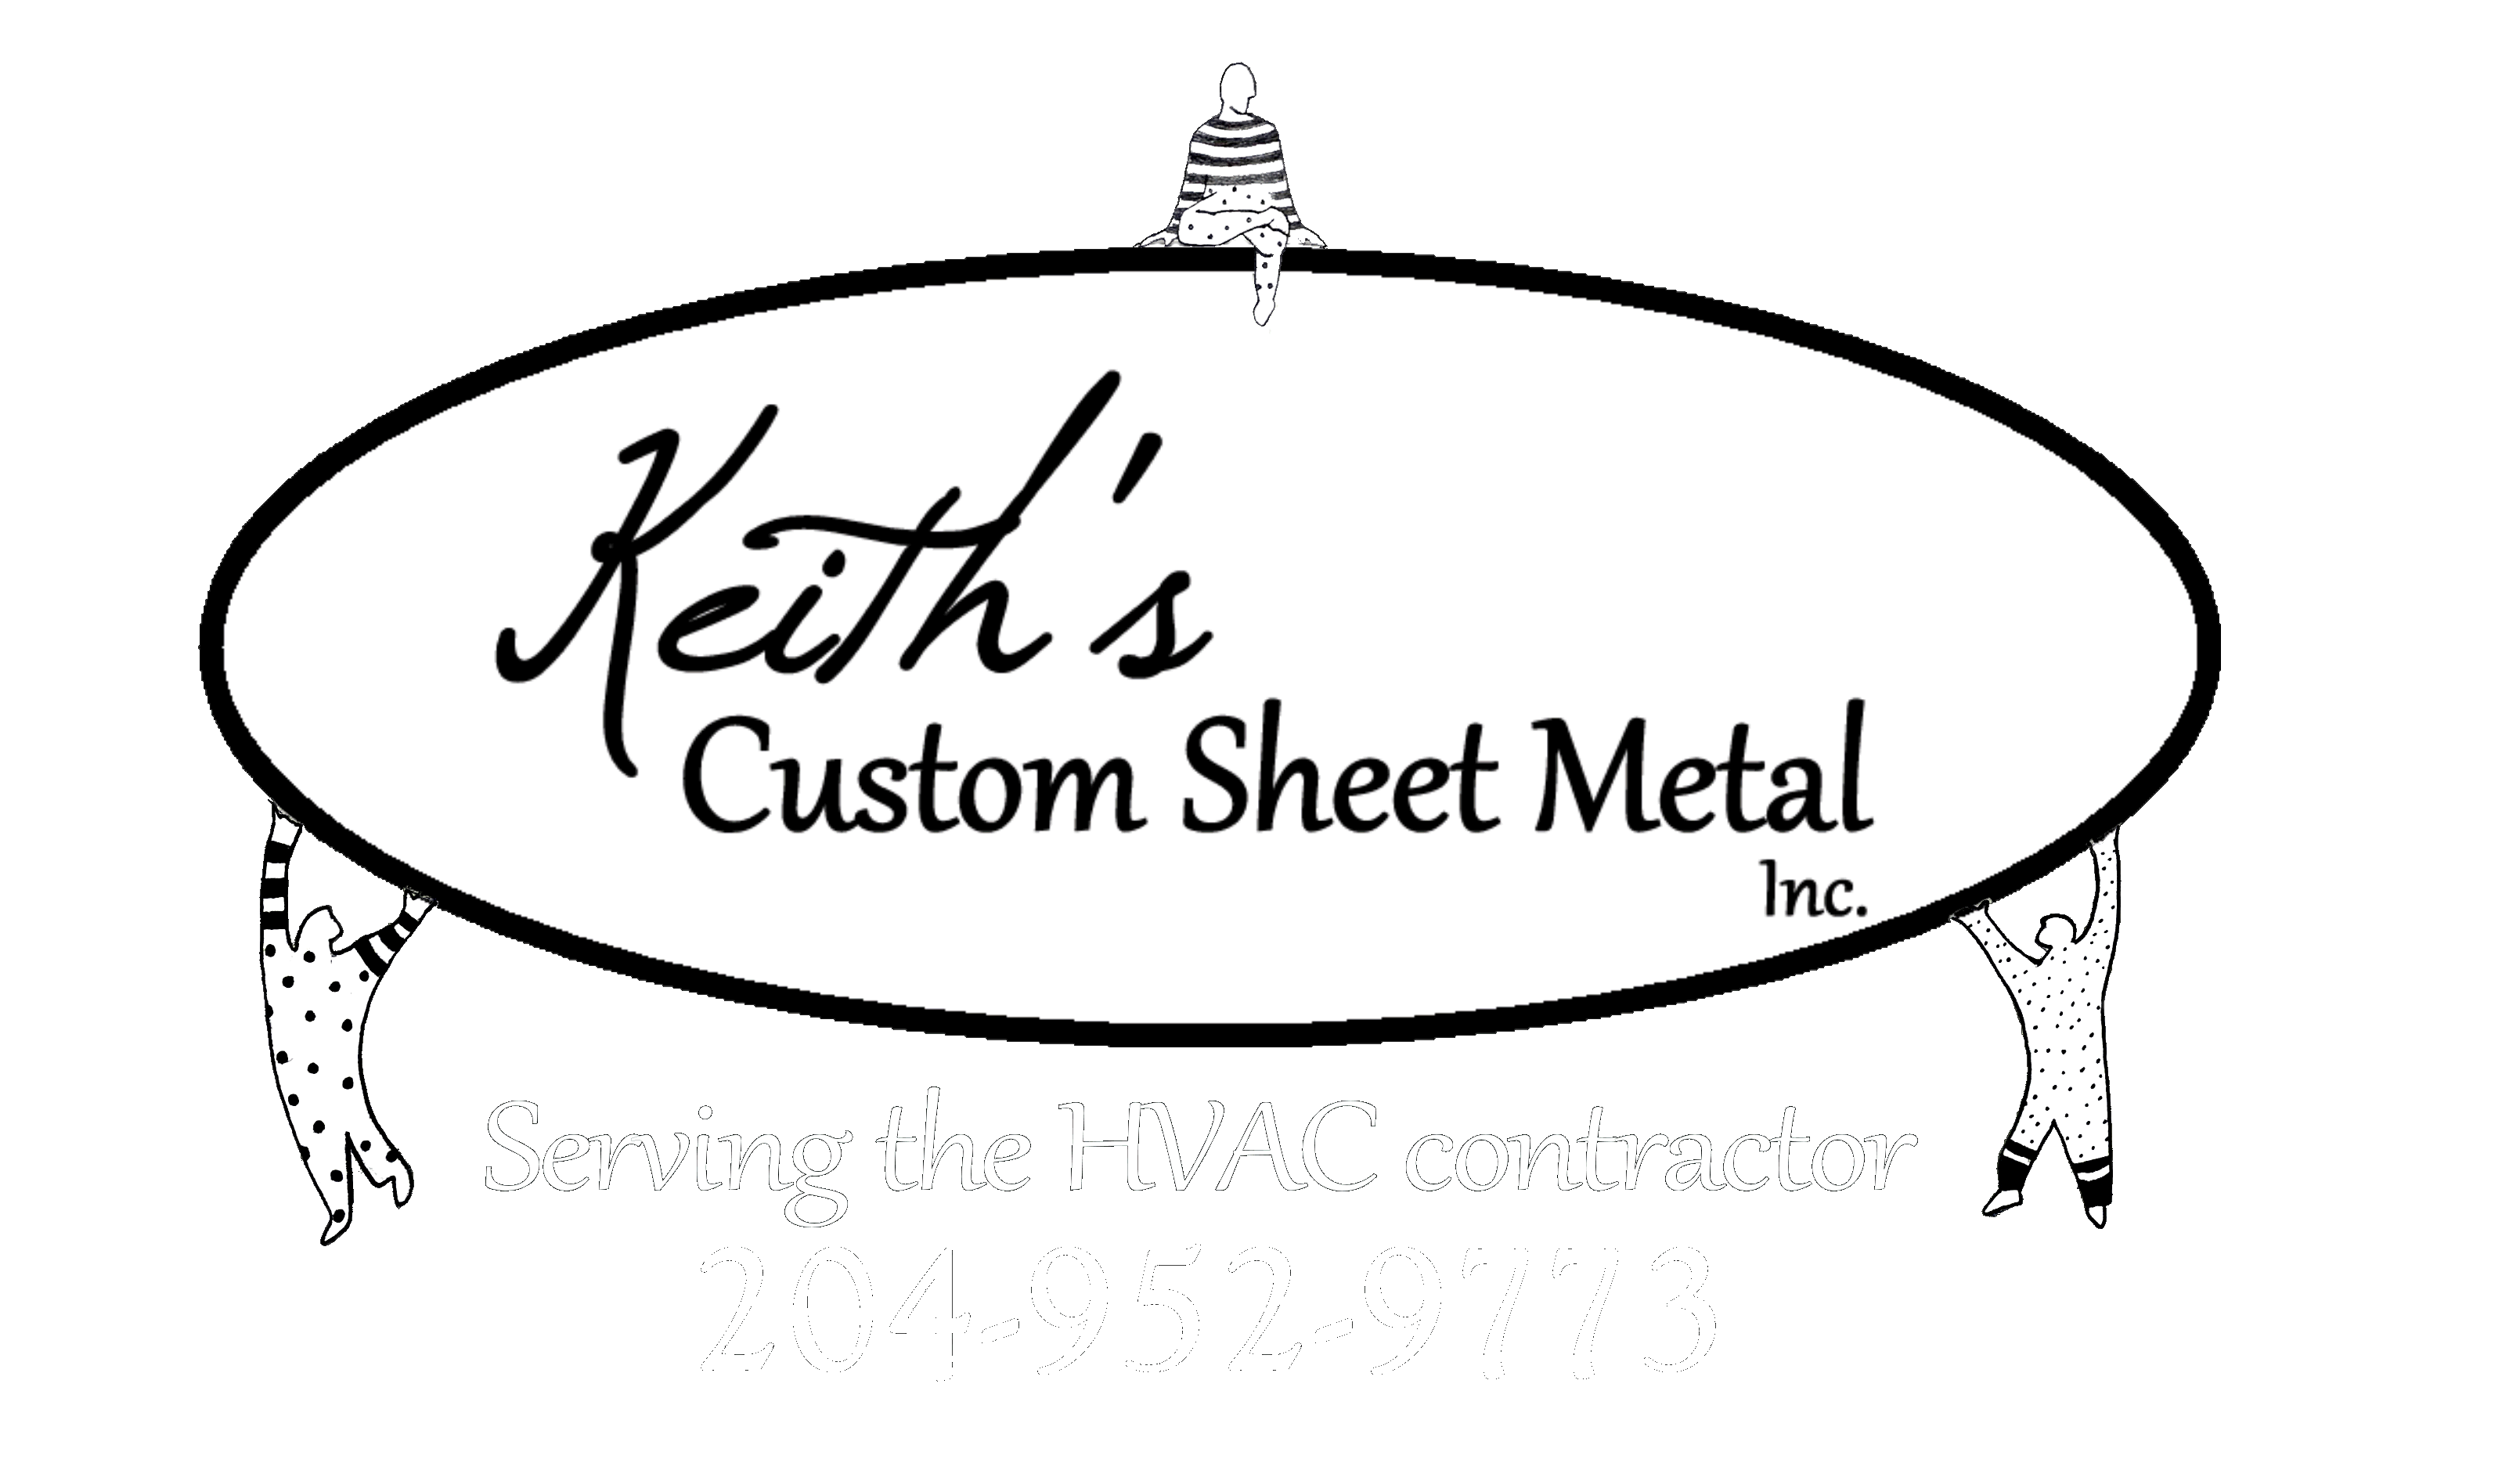 Keith's Custom Sheet Metal Inc.